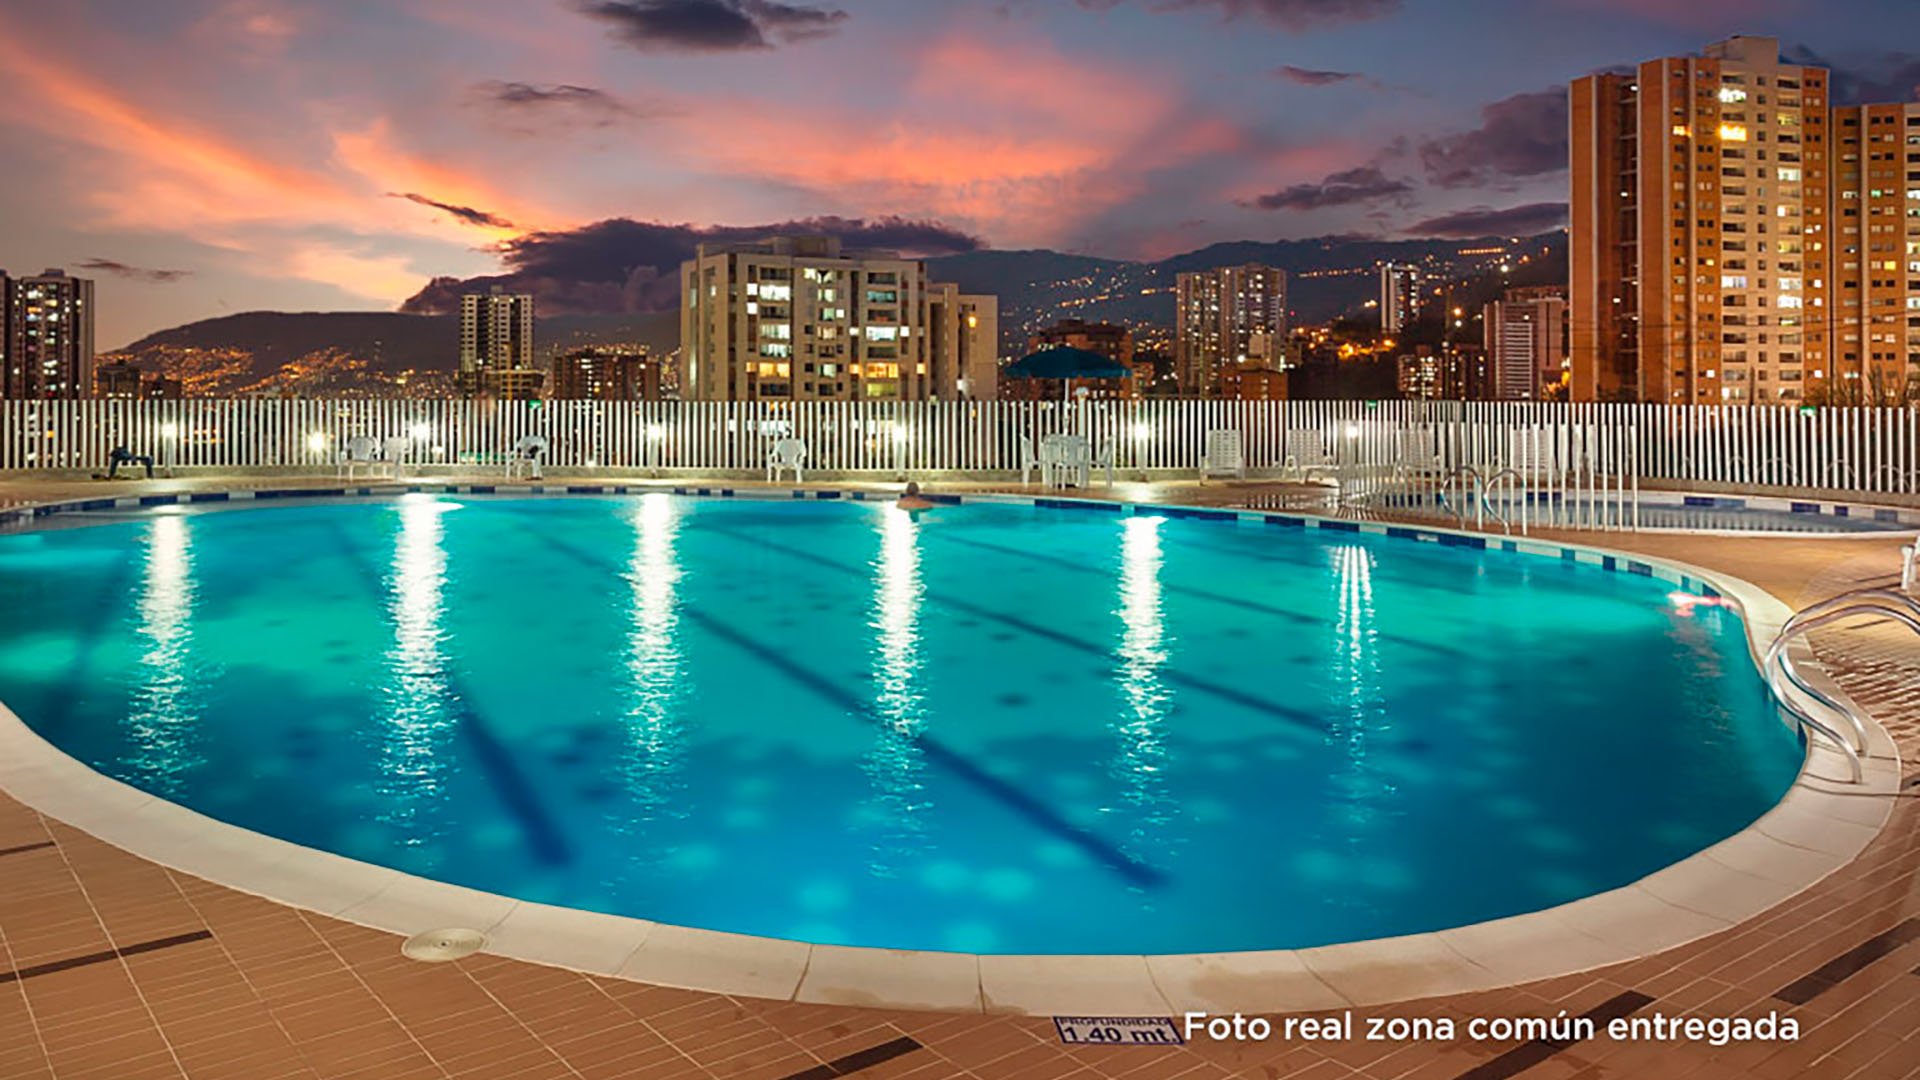 Monteazul-apartamentos-coninsa-piscina-noche